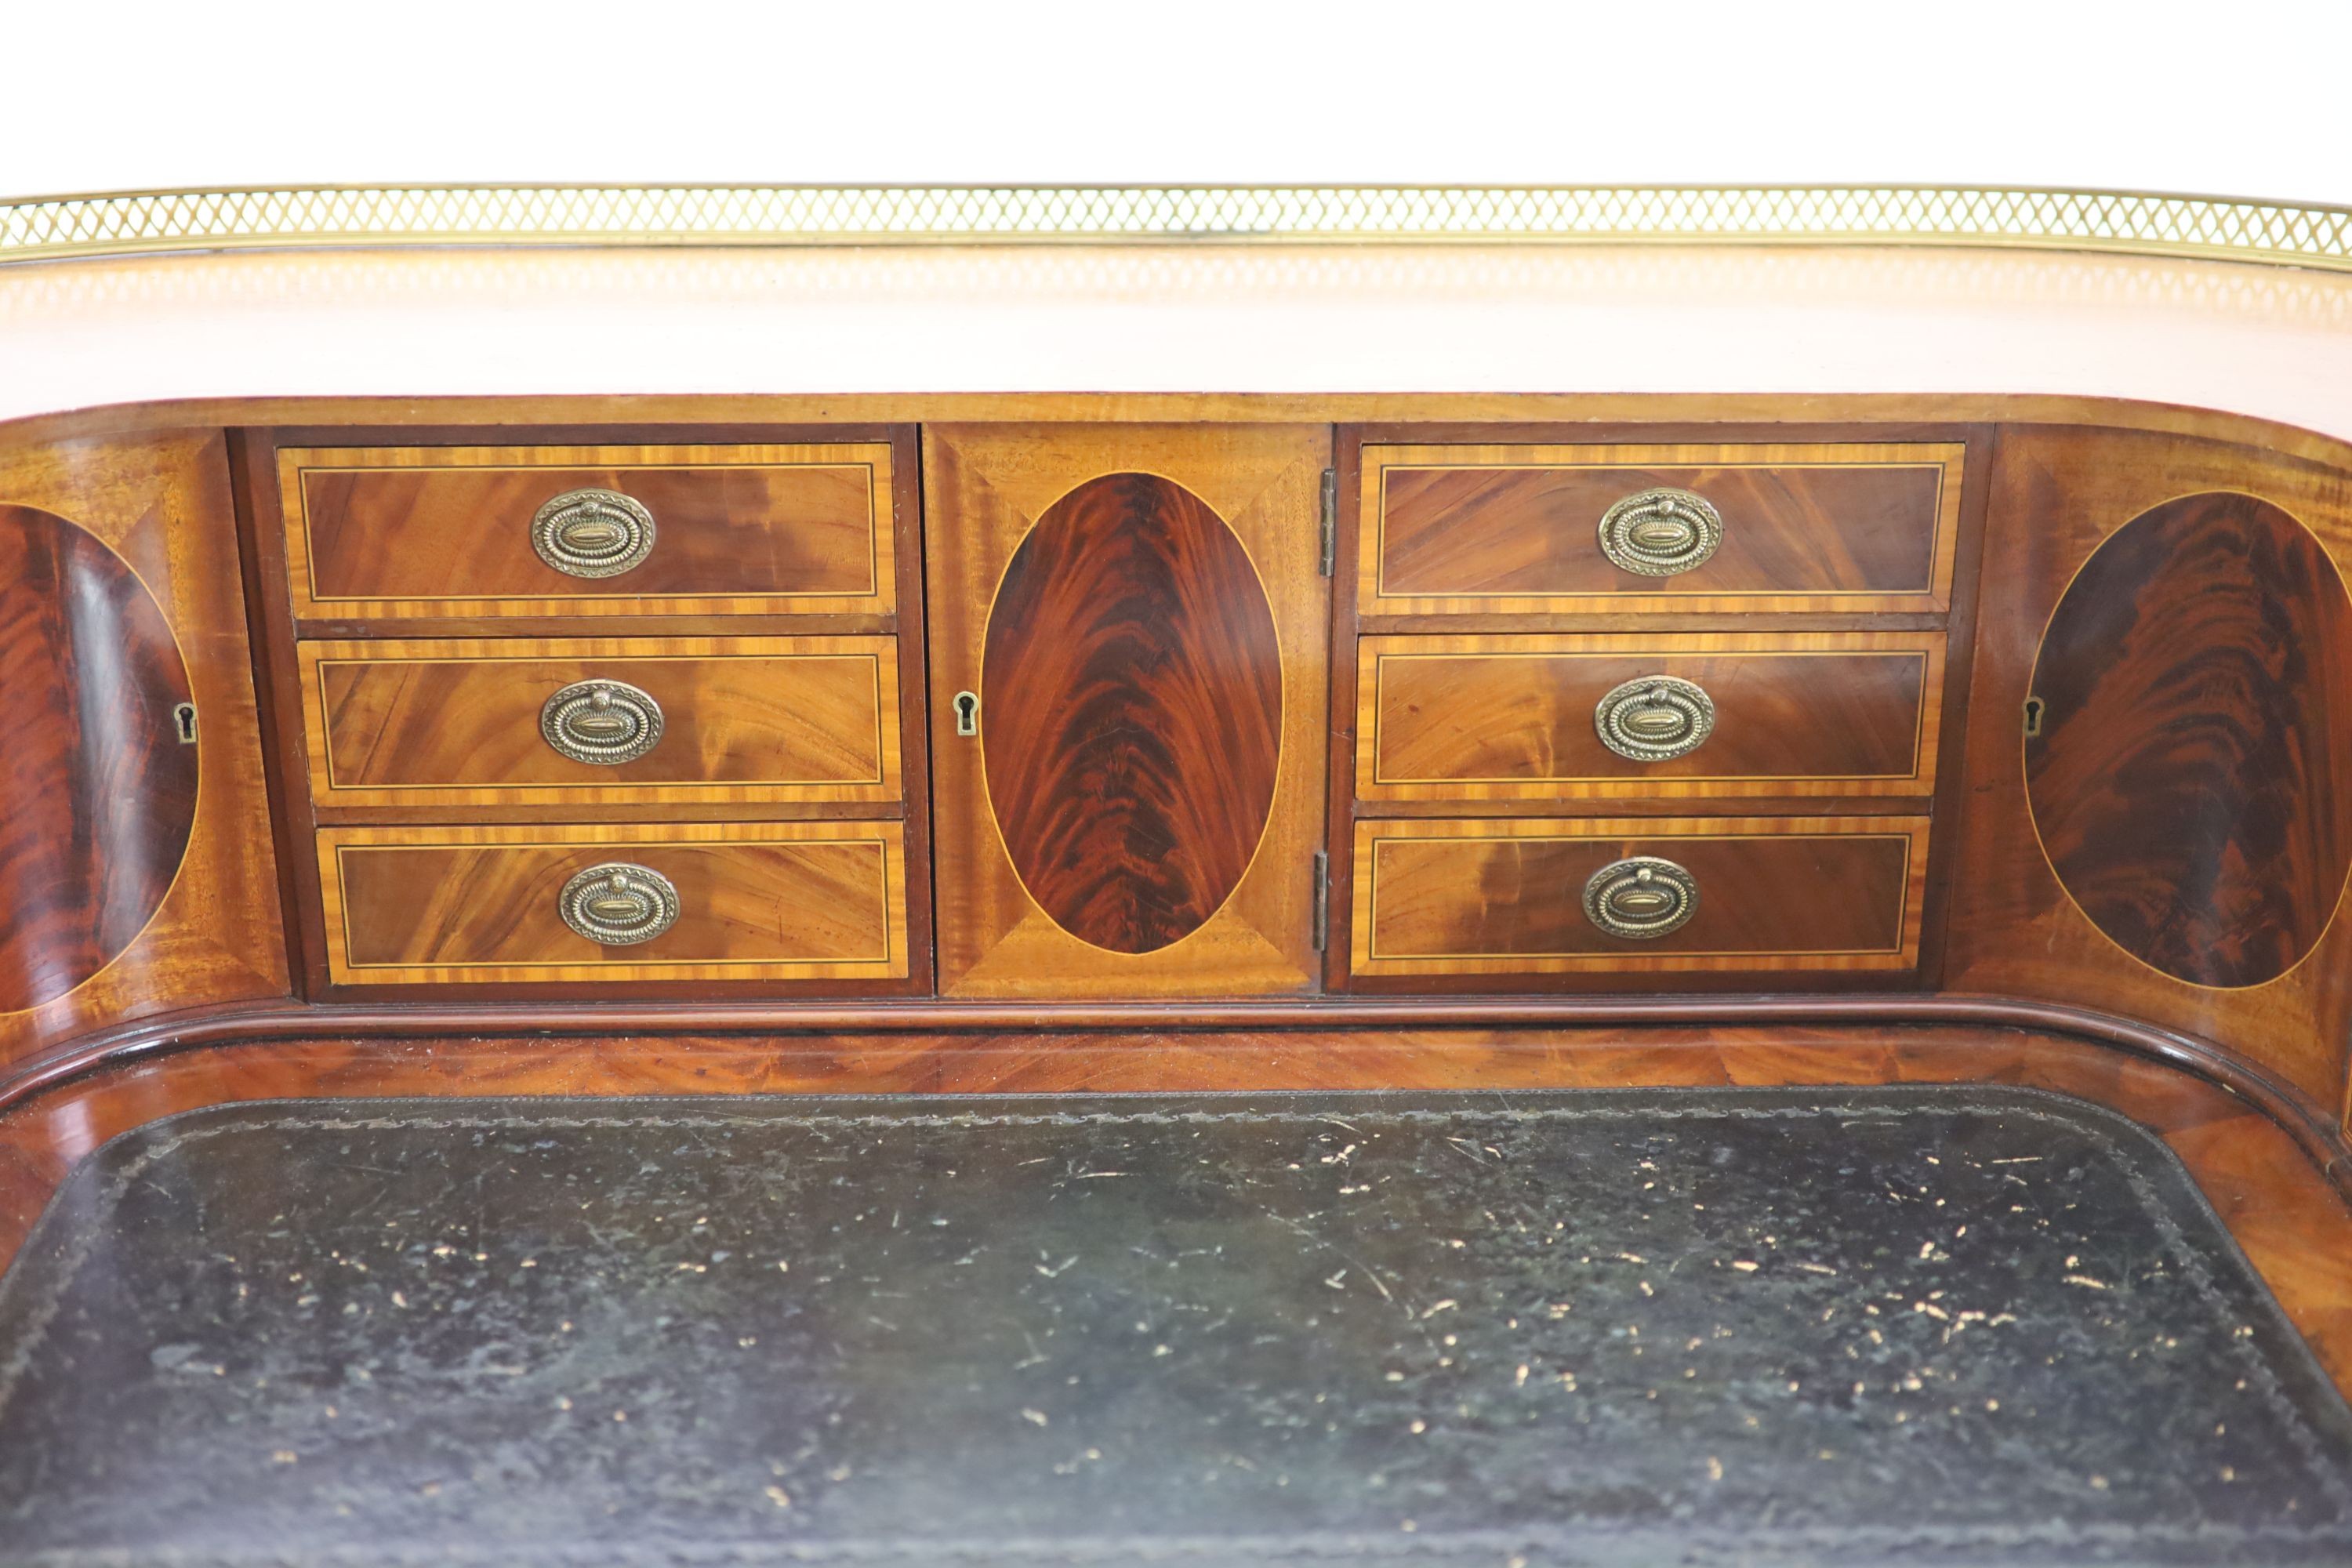 An Edwardian Sheraton revival satinwood banded mahogany Carlton House desk, W.138cm D.65cm H.104cm